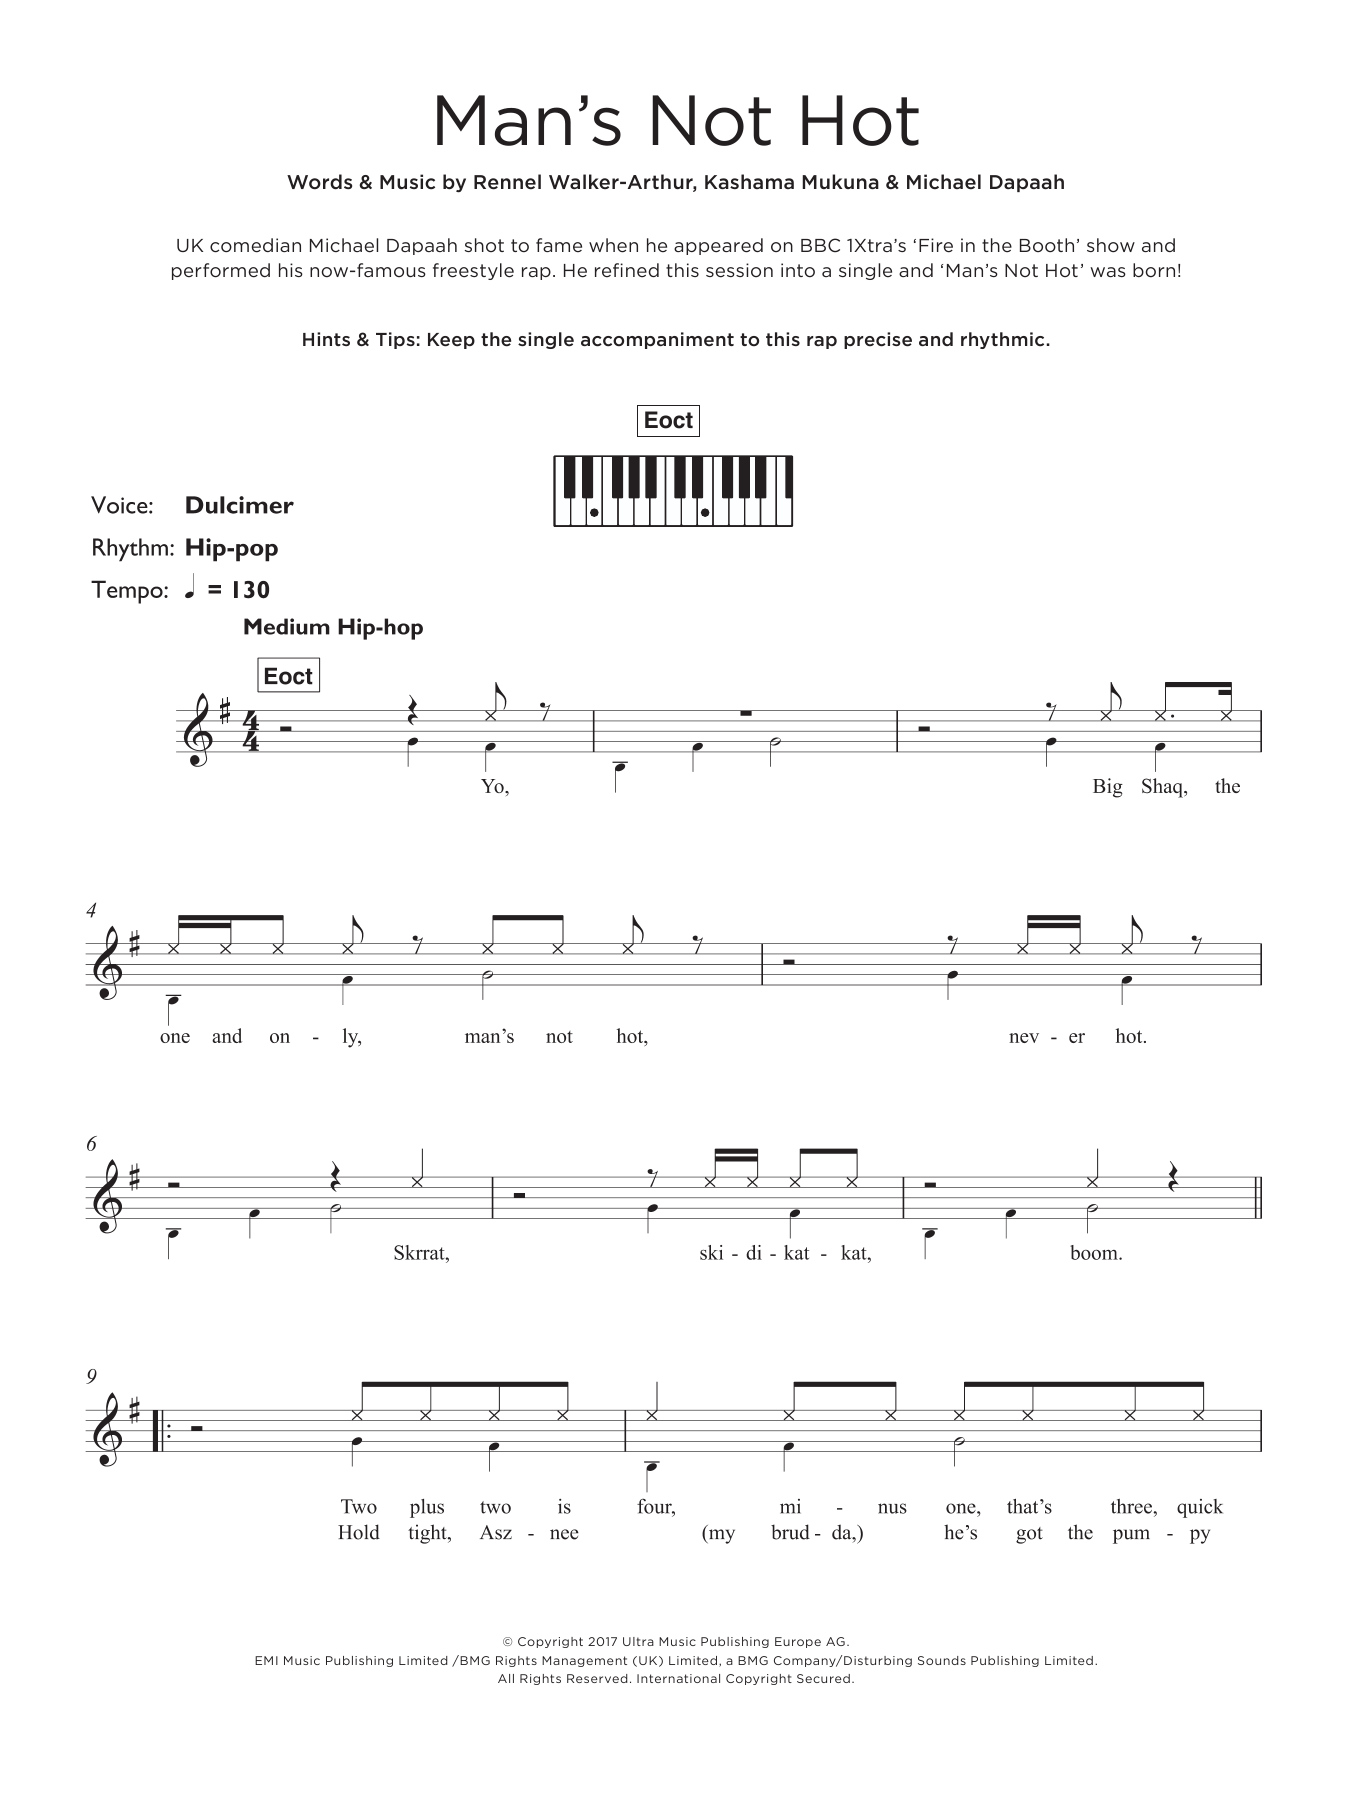 Big Shaq Man's Not Hot Sheet Music Notes & Chords for Ukulele - Download or Print PDF